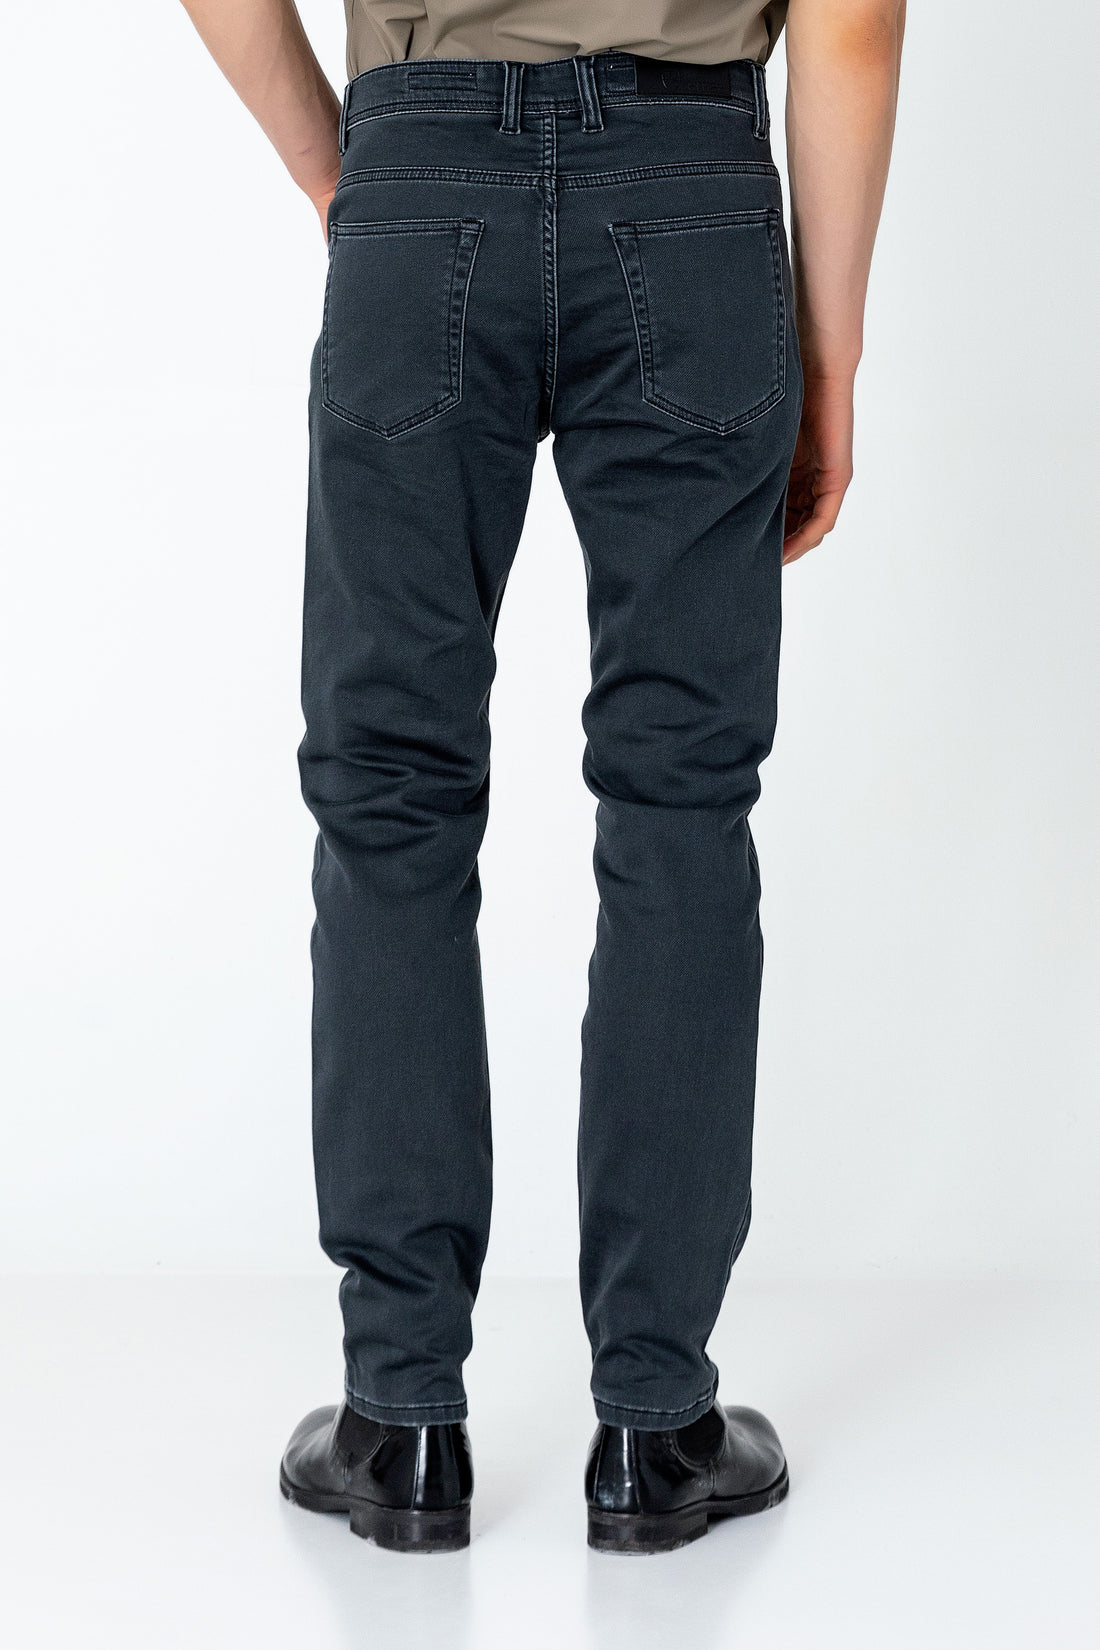 Super Soft 5-pocket Style Pants - Anthracite